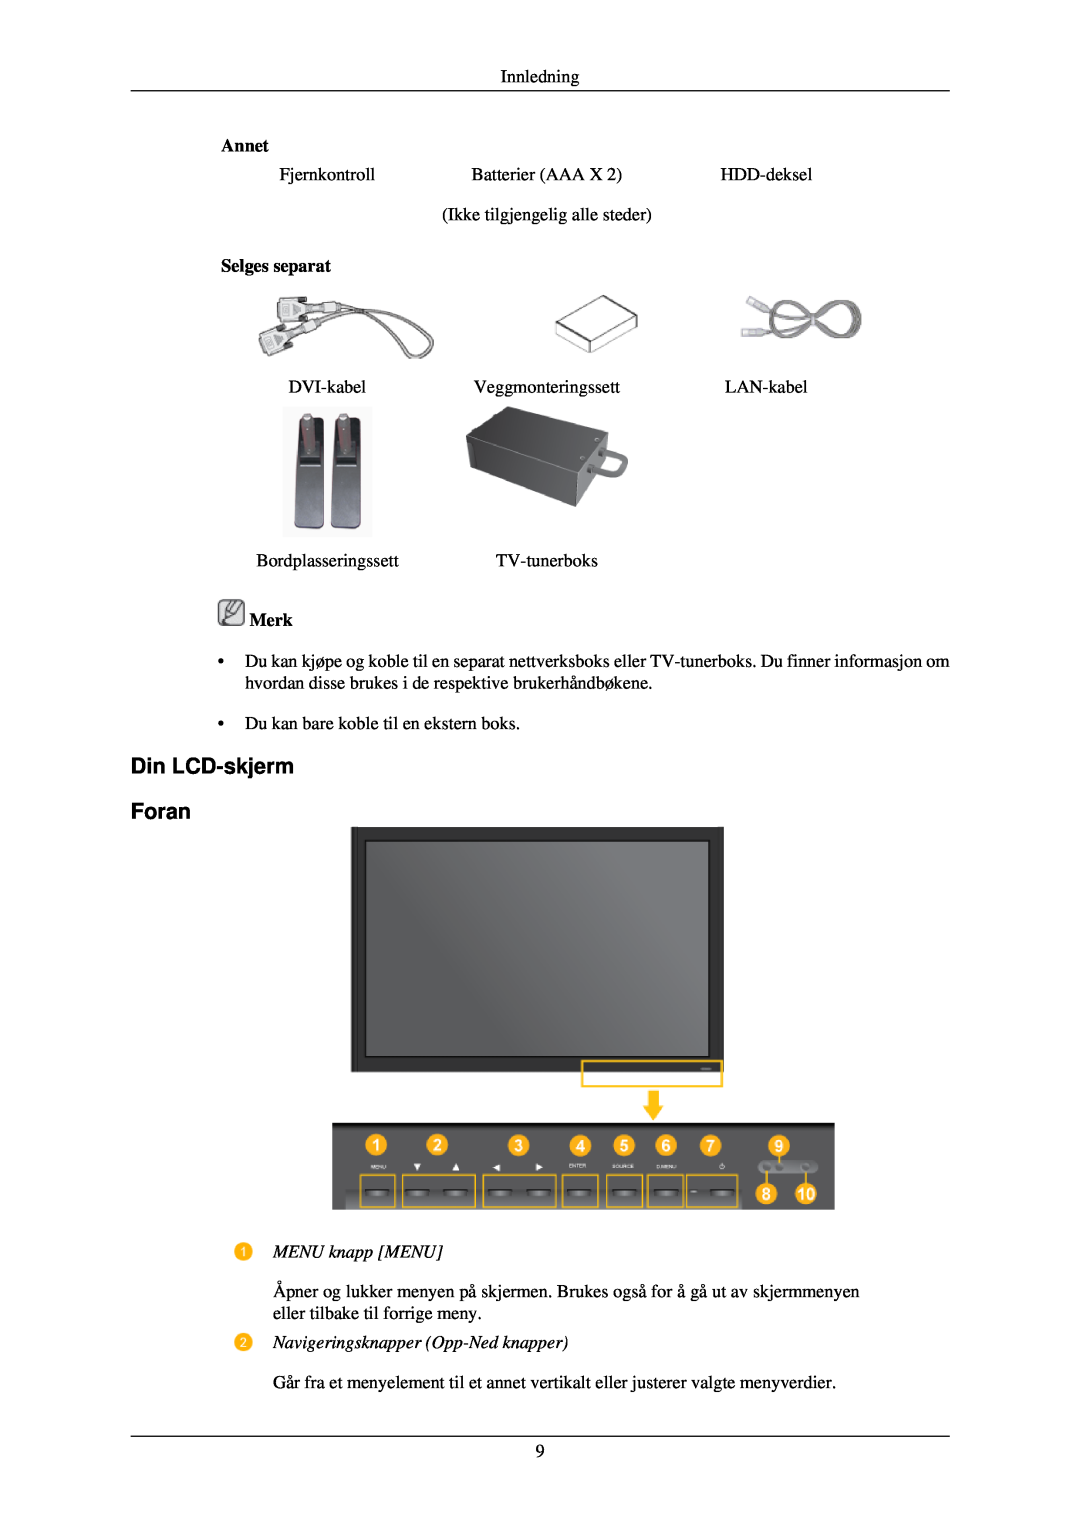 Samsung LH40TCUMBG/EN, LH46TCUMBC/EN, LH40TCQMBG/EN manual Din LCD-skjerm Foran, Selges separat, Annet, Merk, MENU knapp MENU 